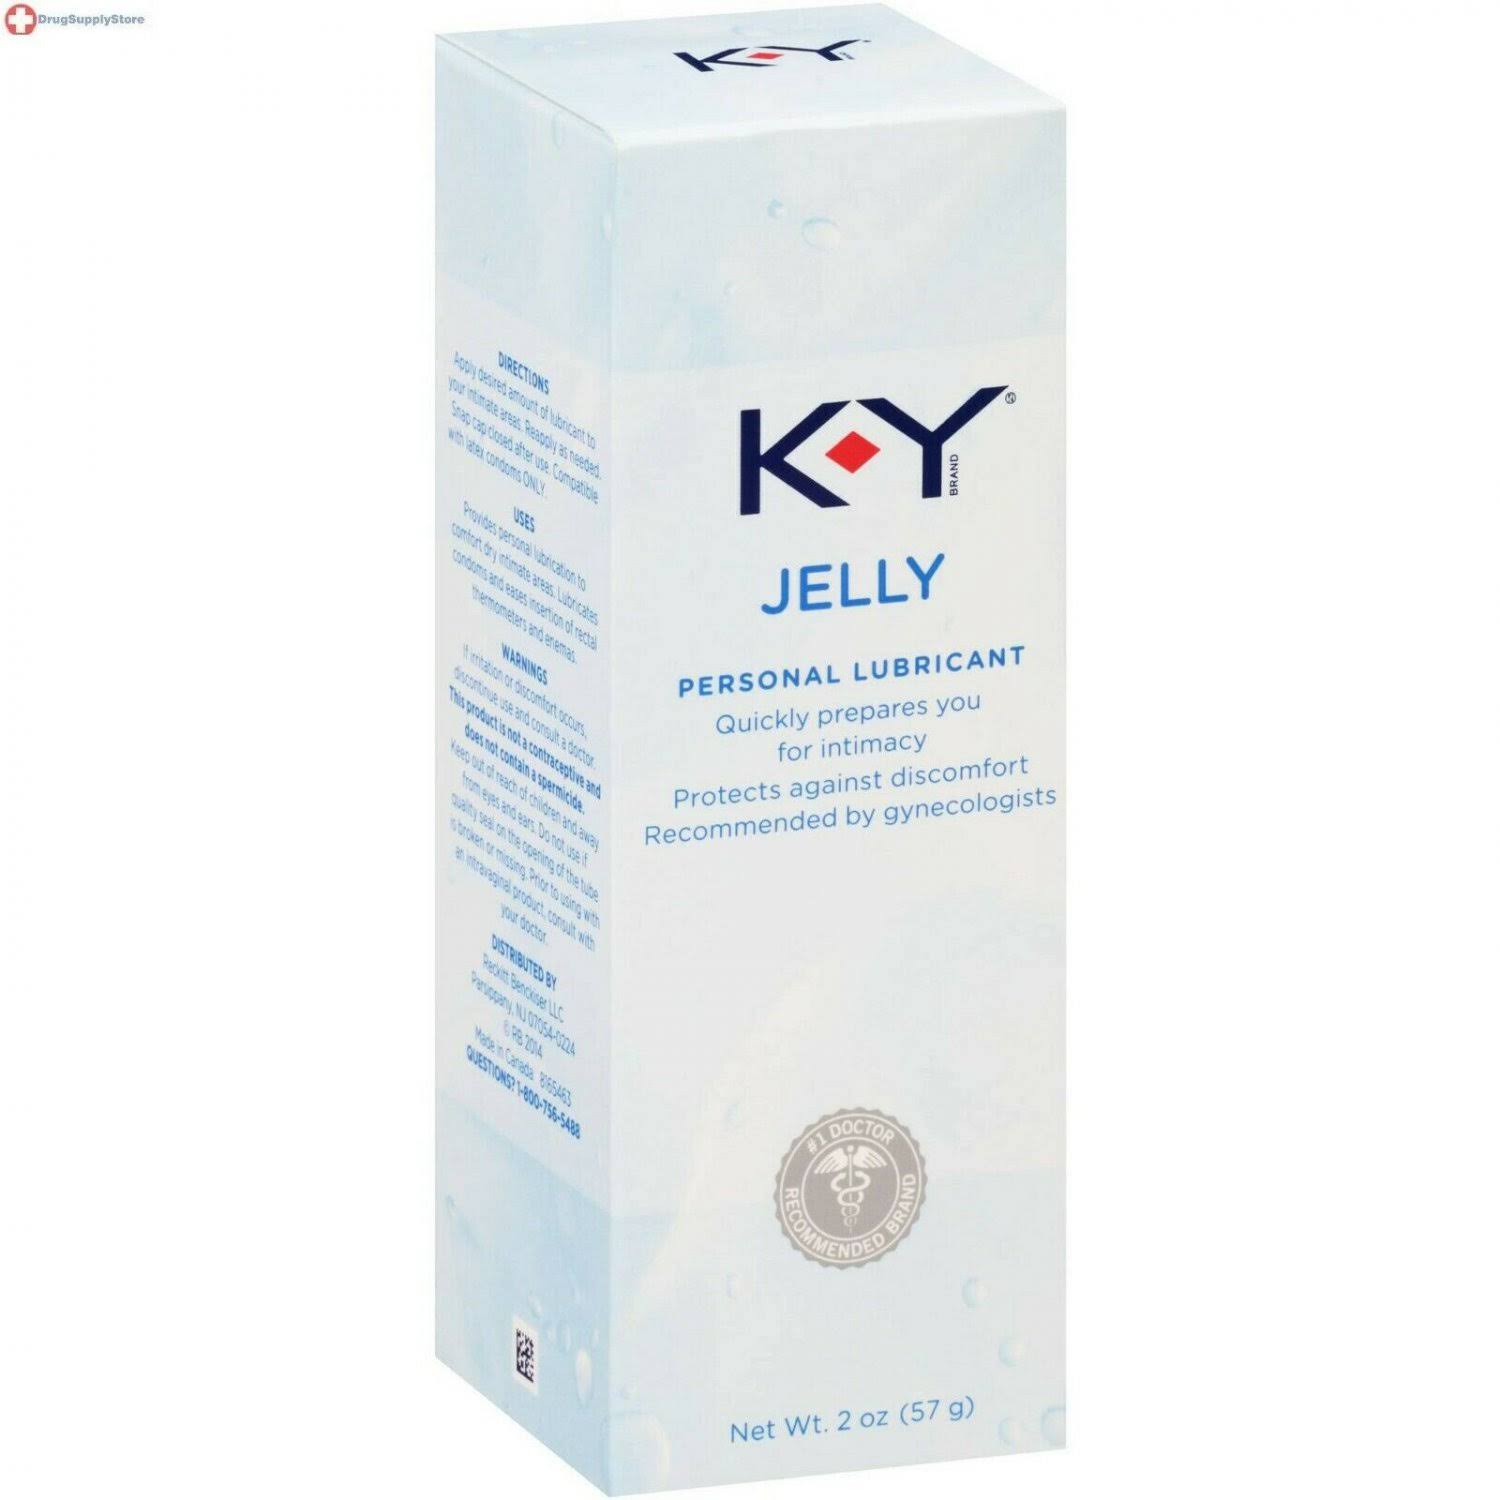 K-Y Brand Jelly Personal Lubricant - 2oz